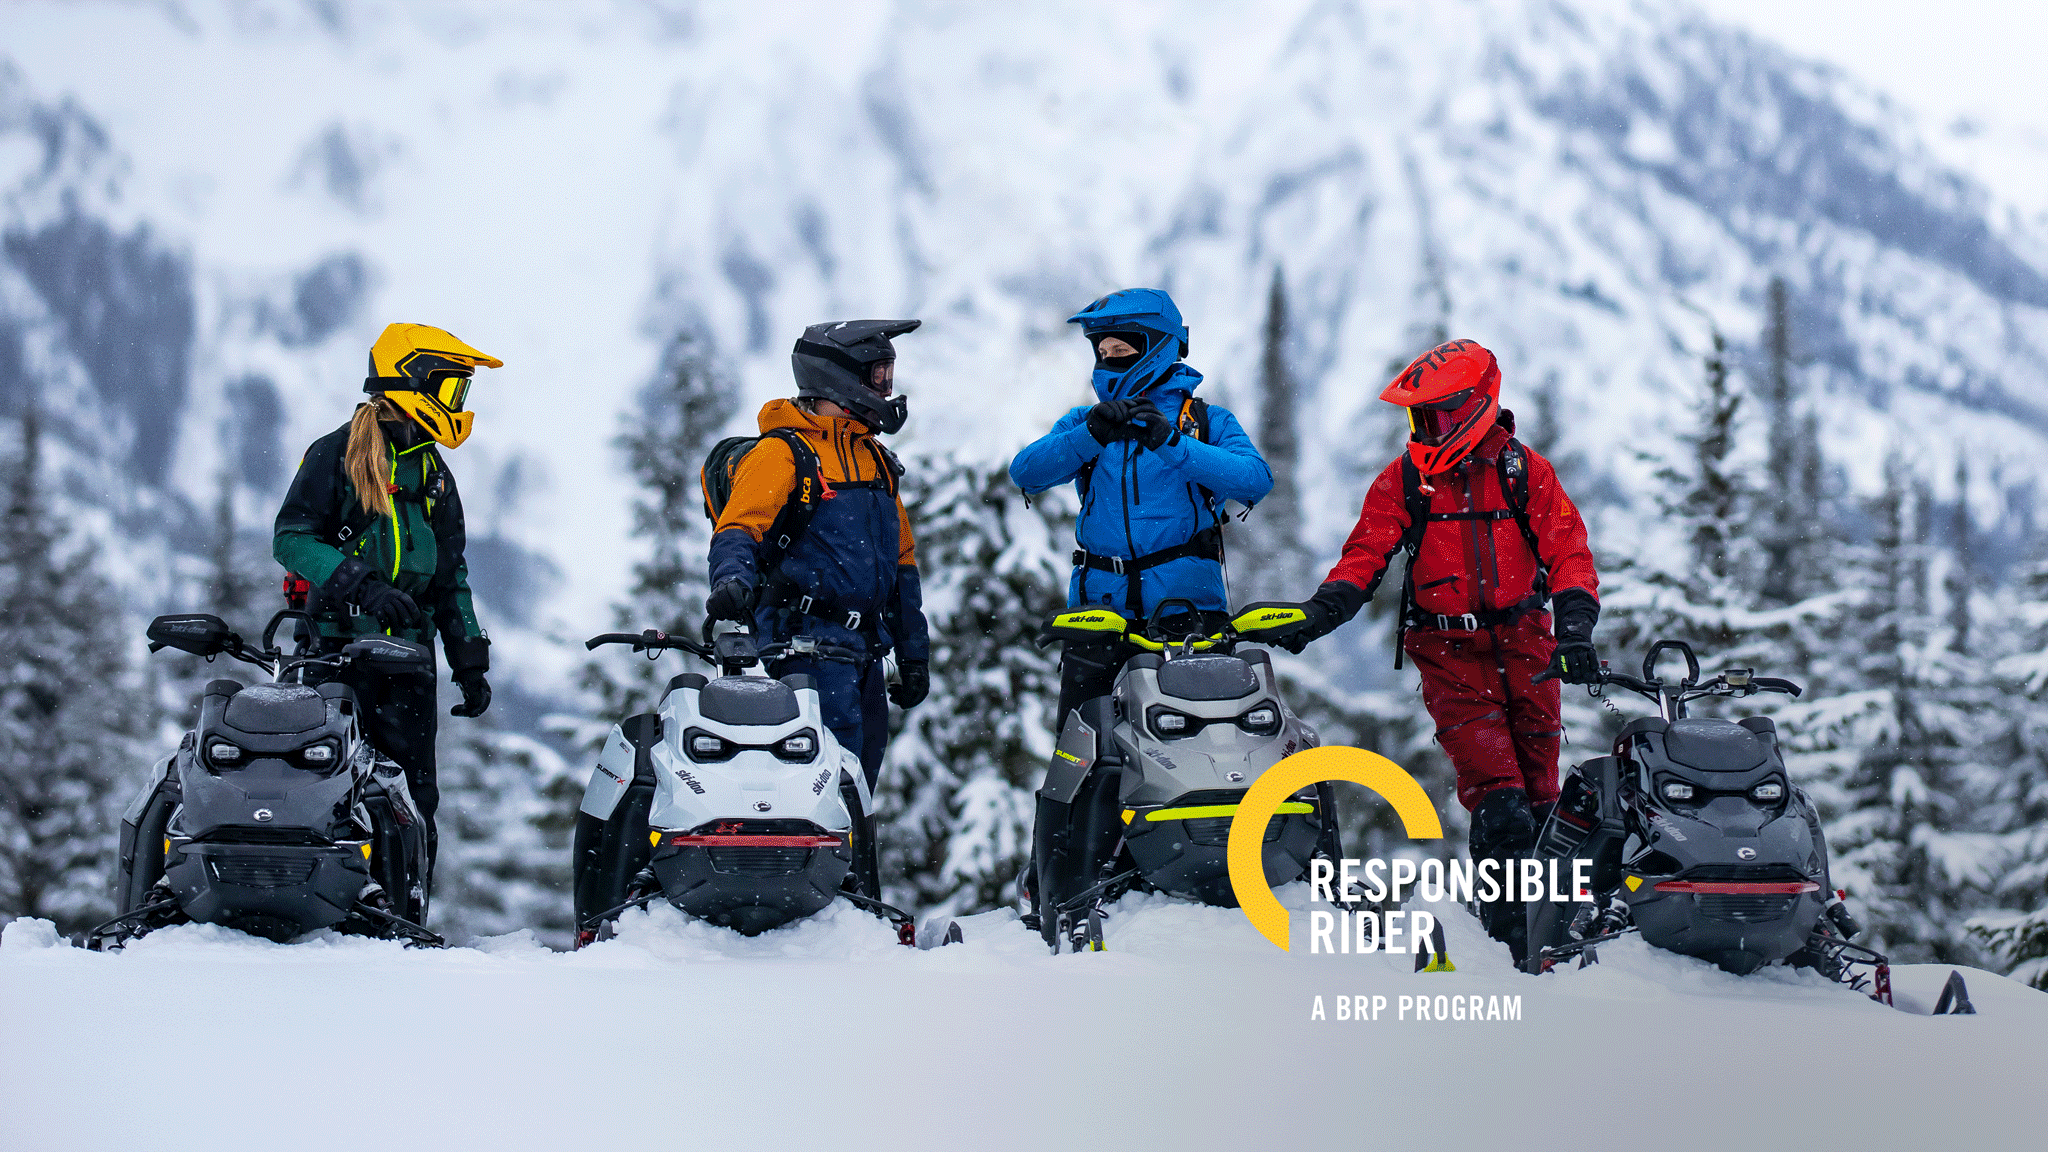 Responsible Rider : a BRP Program - Ski-Doo